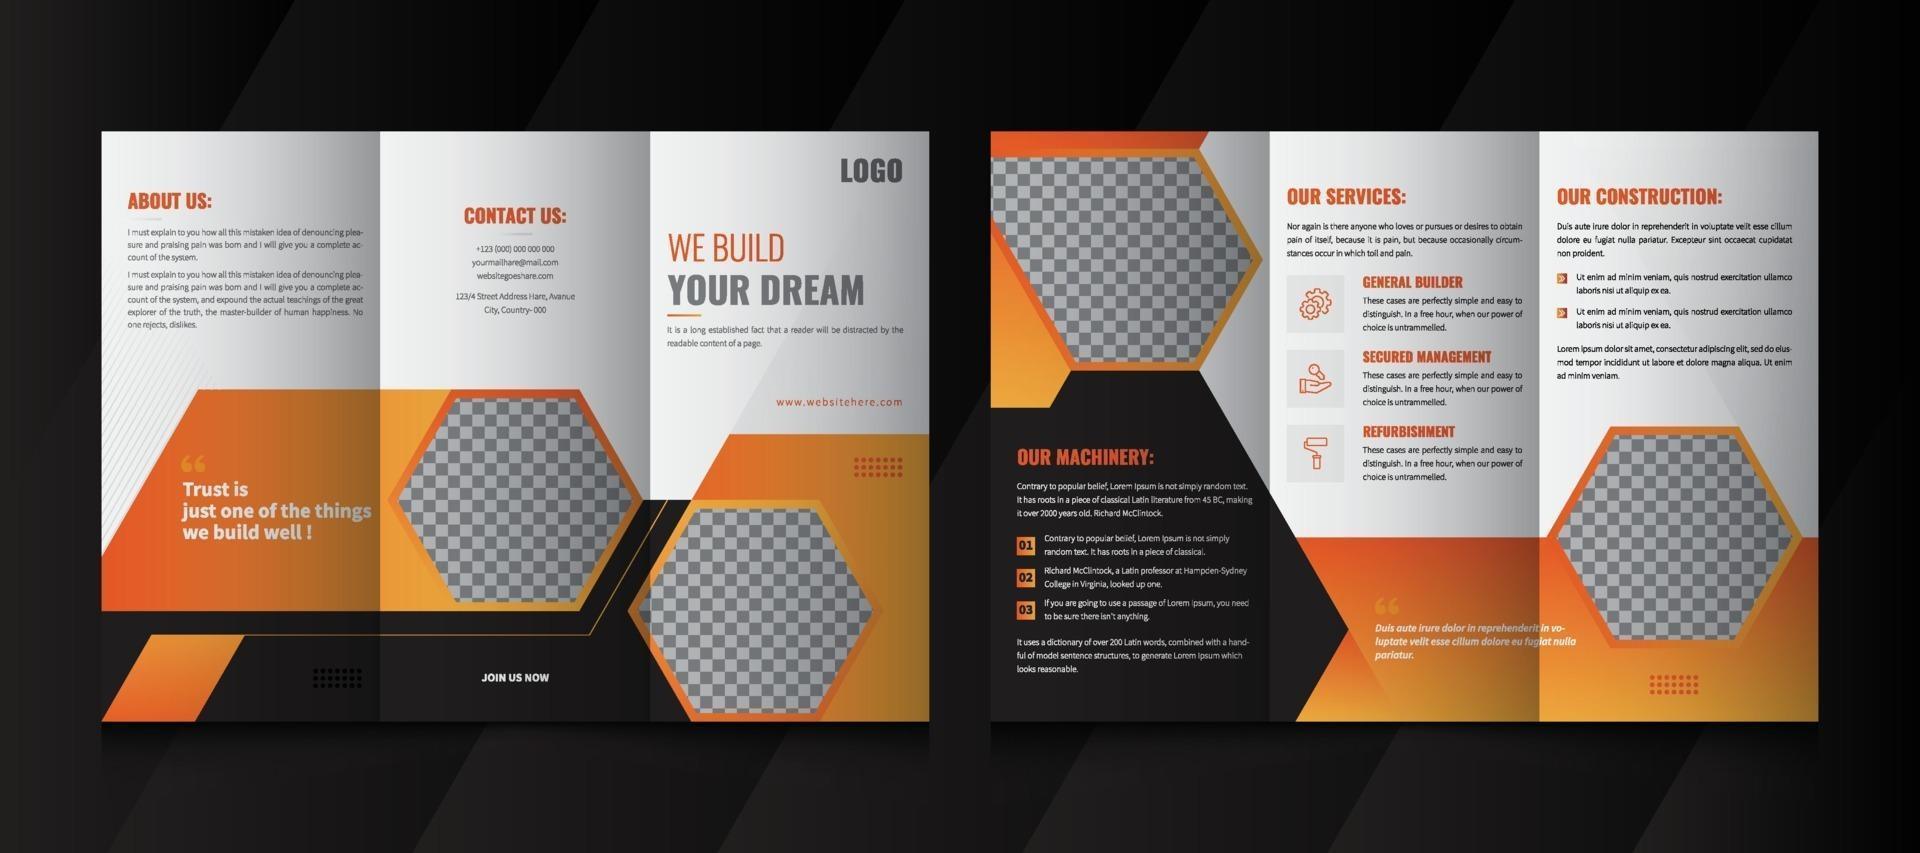 Creative Construction Business Tri Fold brochure design. Construction, Real Estate, Builders Company Tri Fold Brochure, Leaflet, Poster. vector